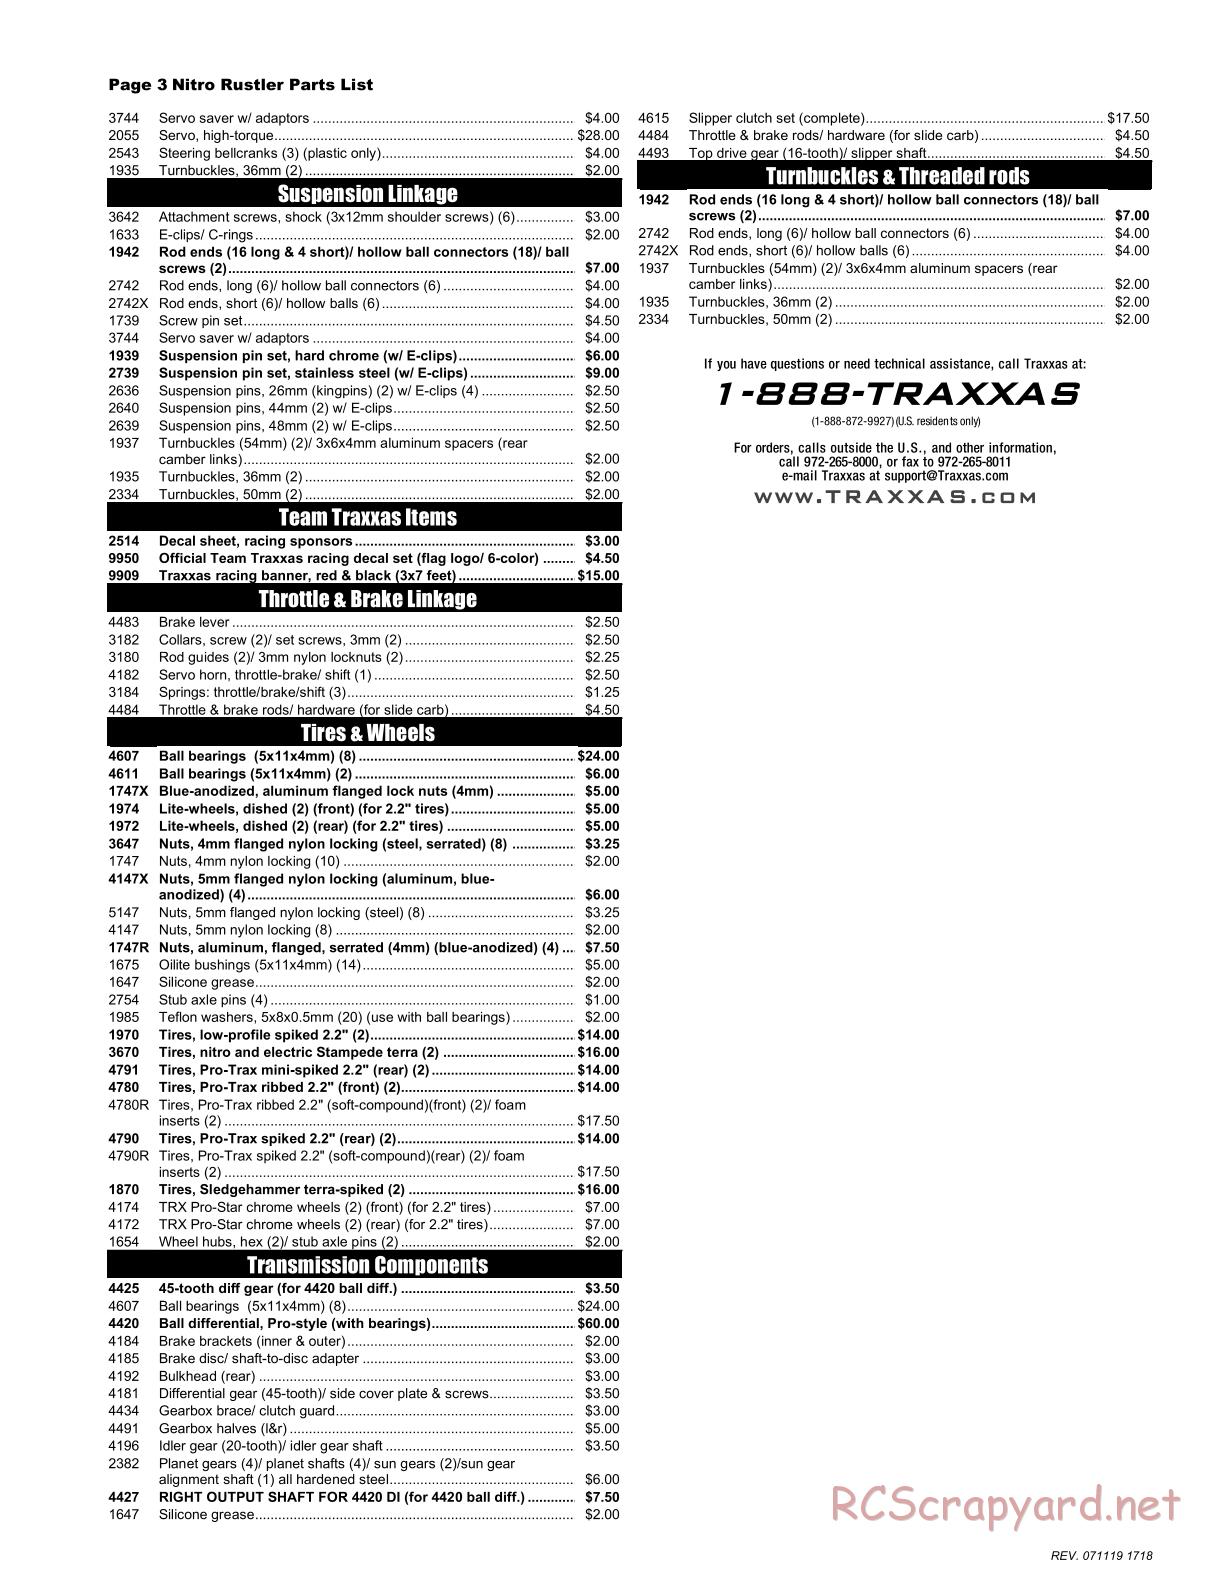 Traxxas - Nitro Rustler (1997) - Parts List - Page 3